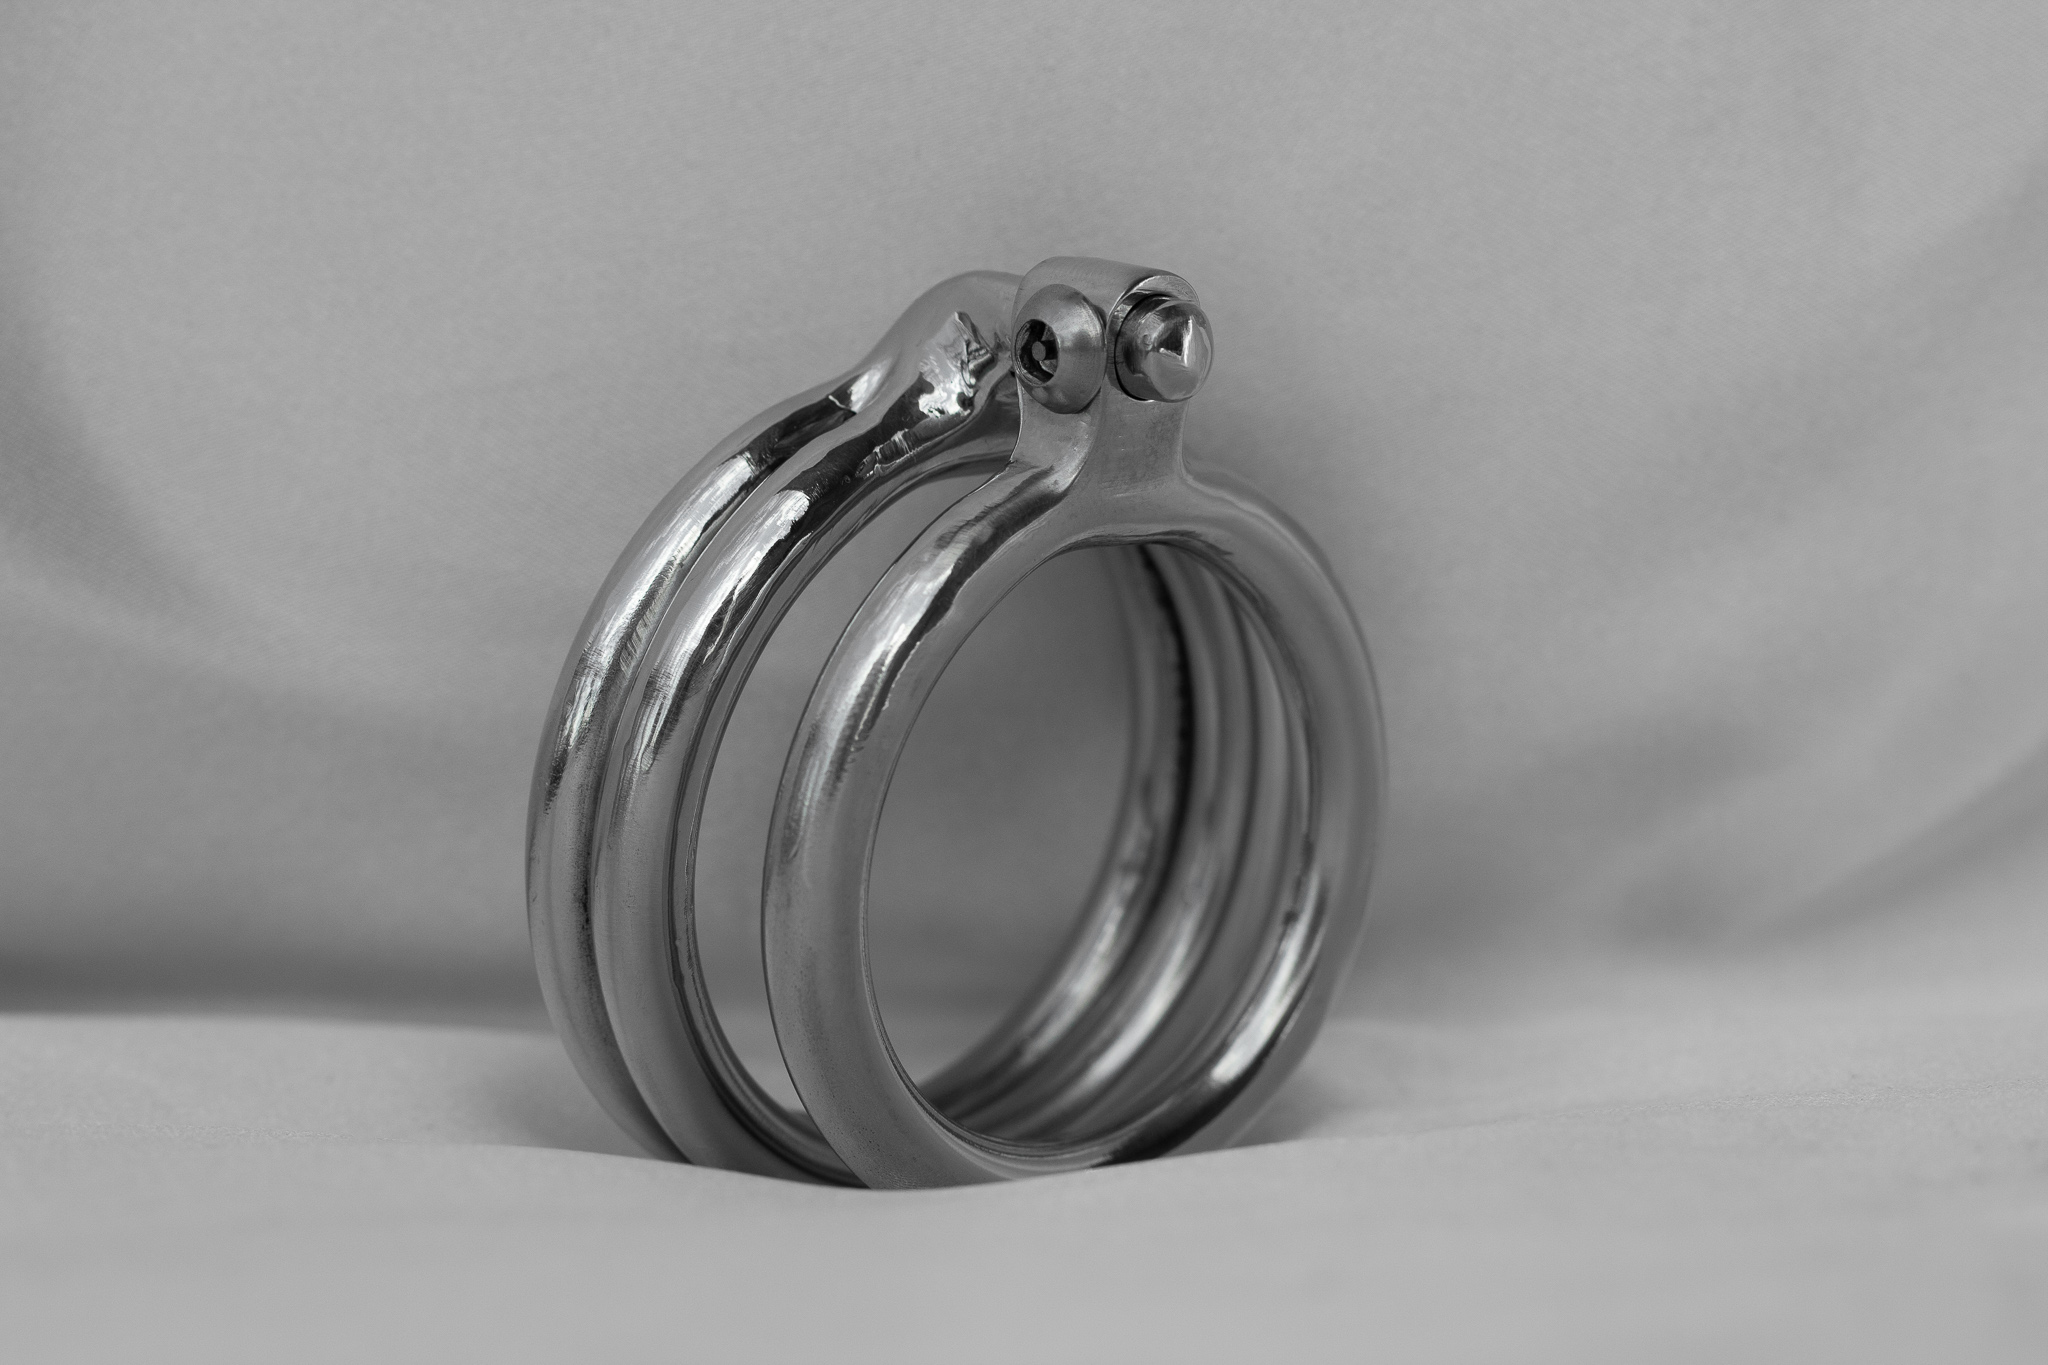 Double Locking Cock Ring Mature Metal